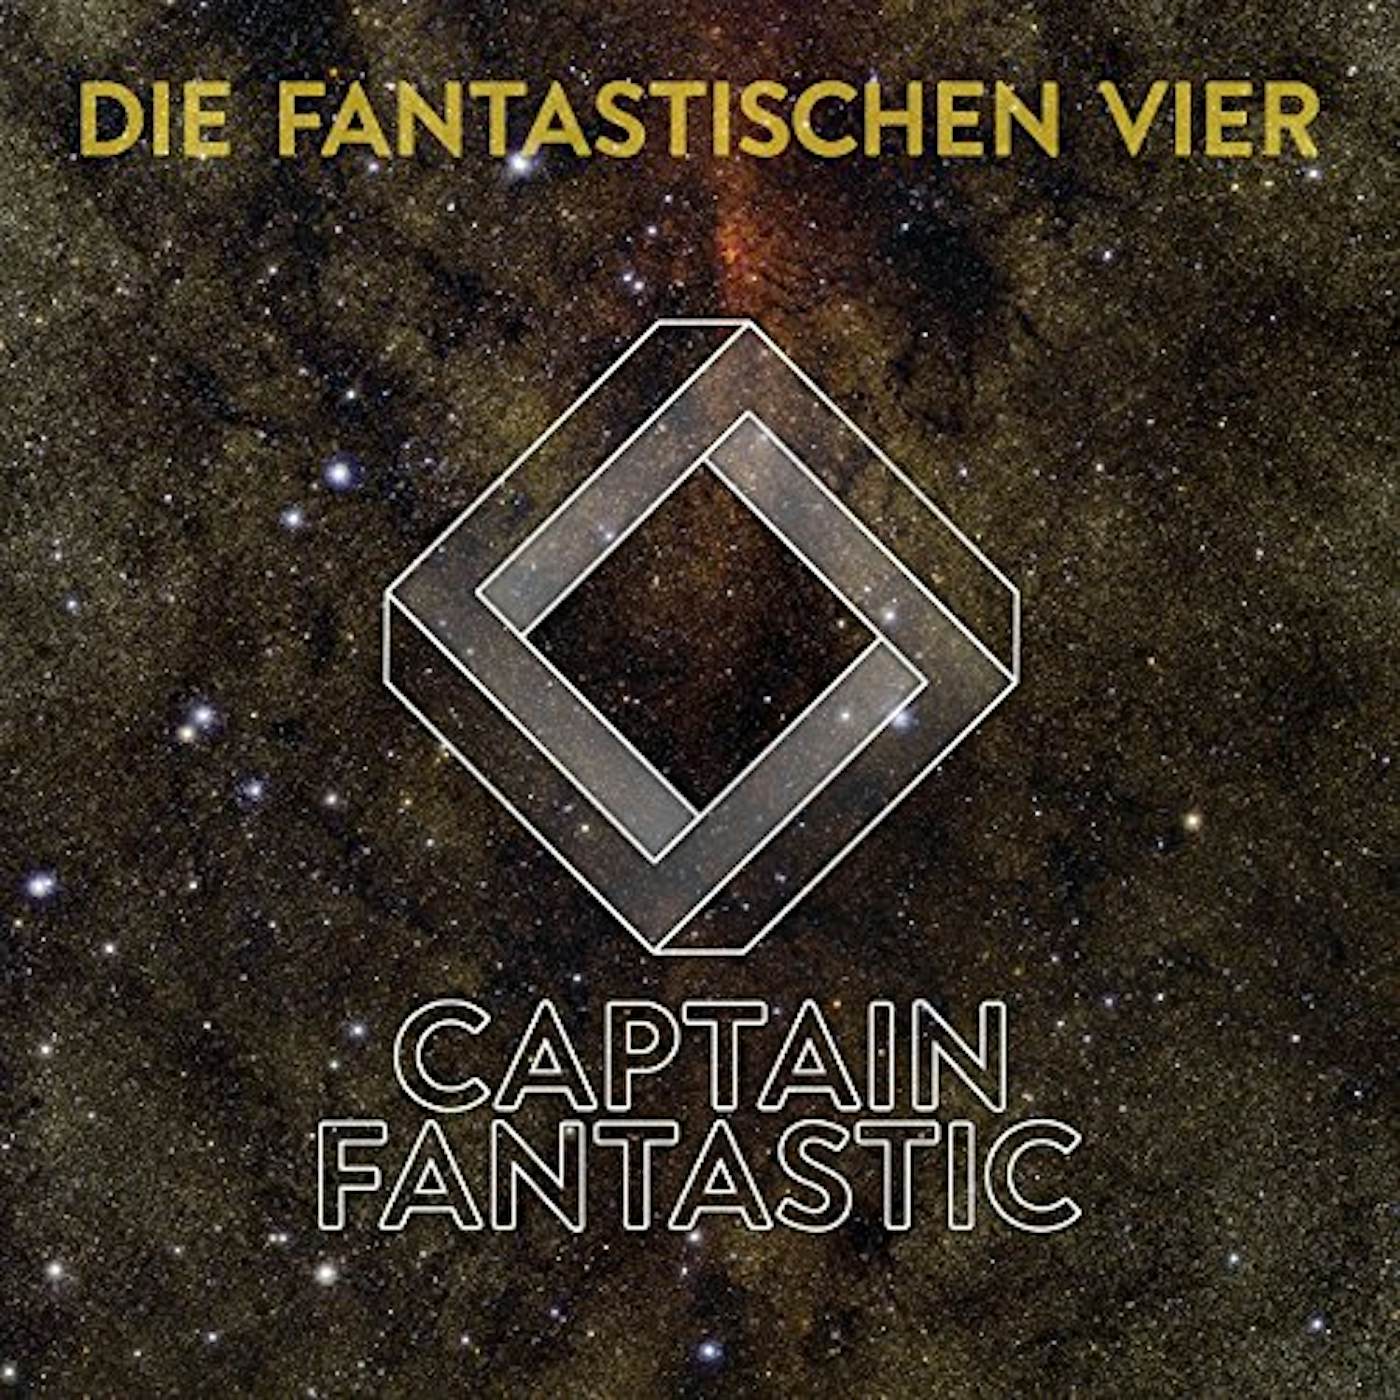 Fantastischen Vier Captain Fantastic Vinyl Record